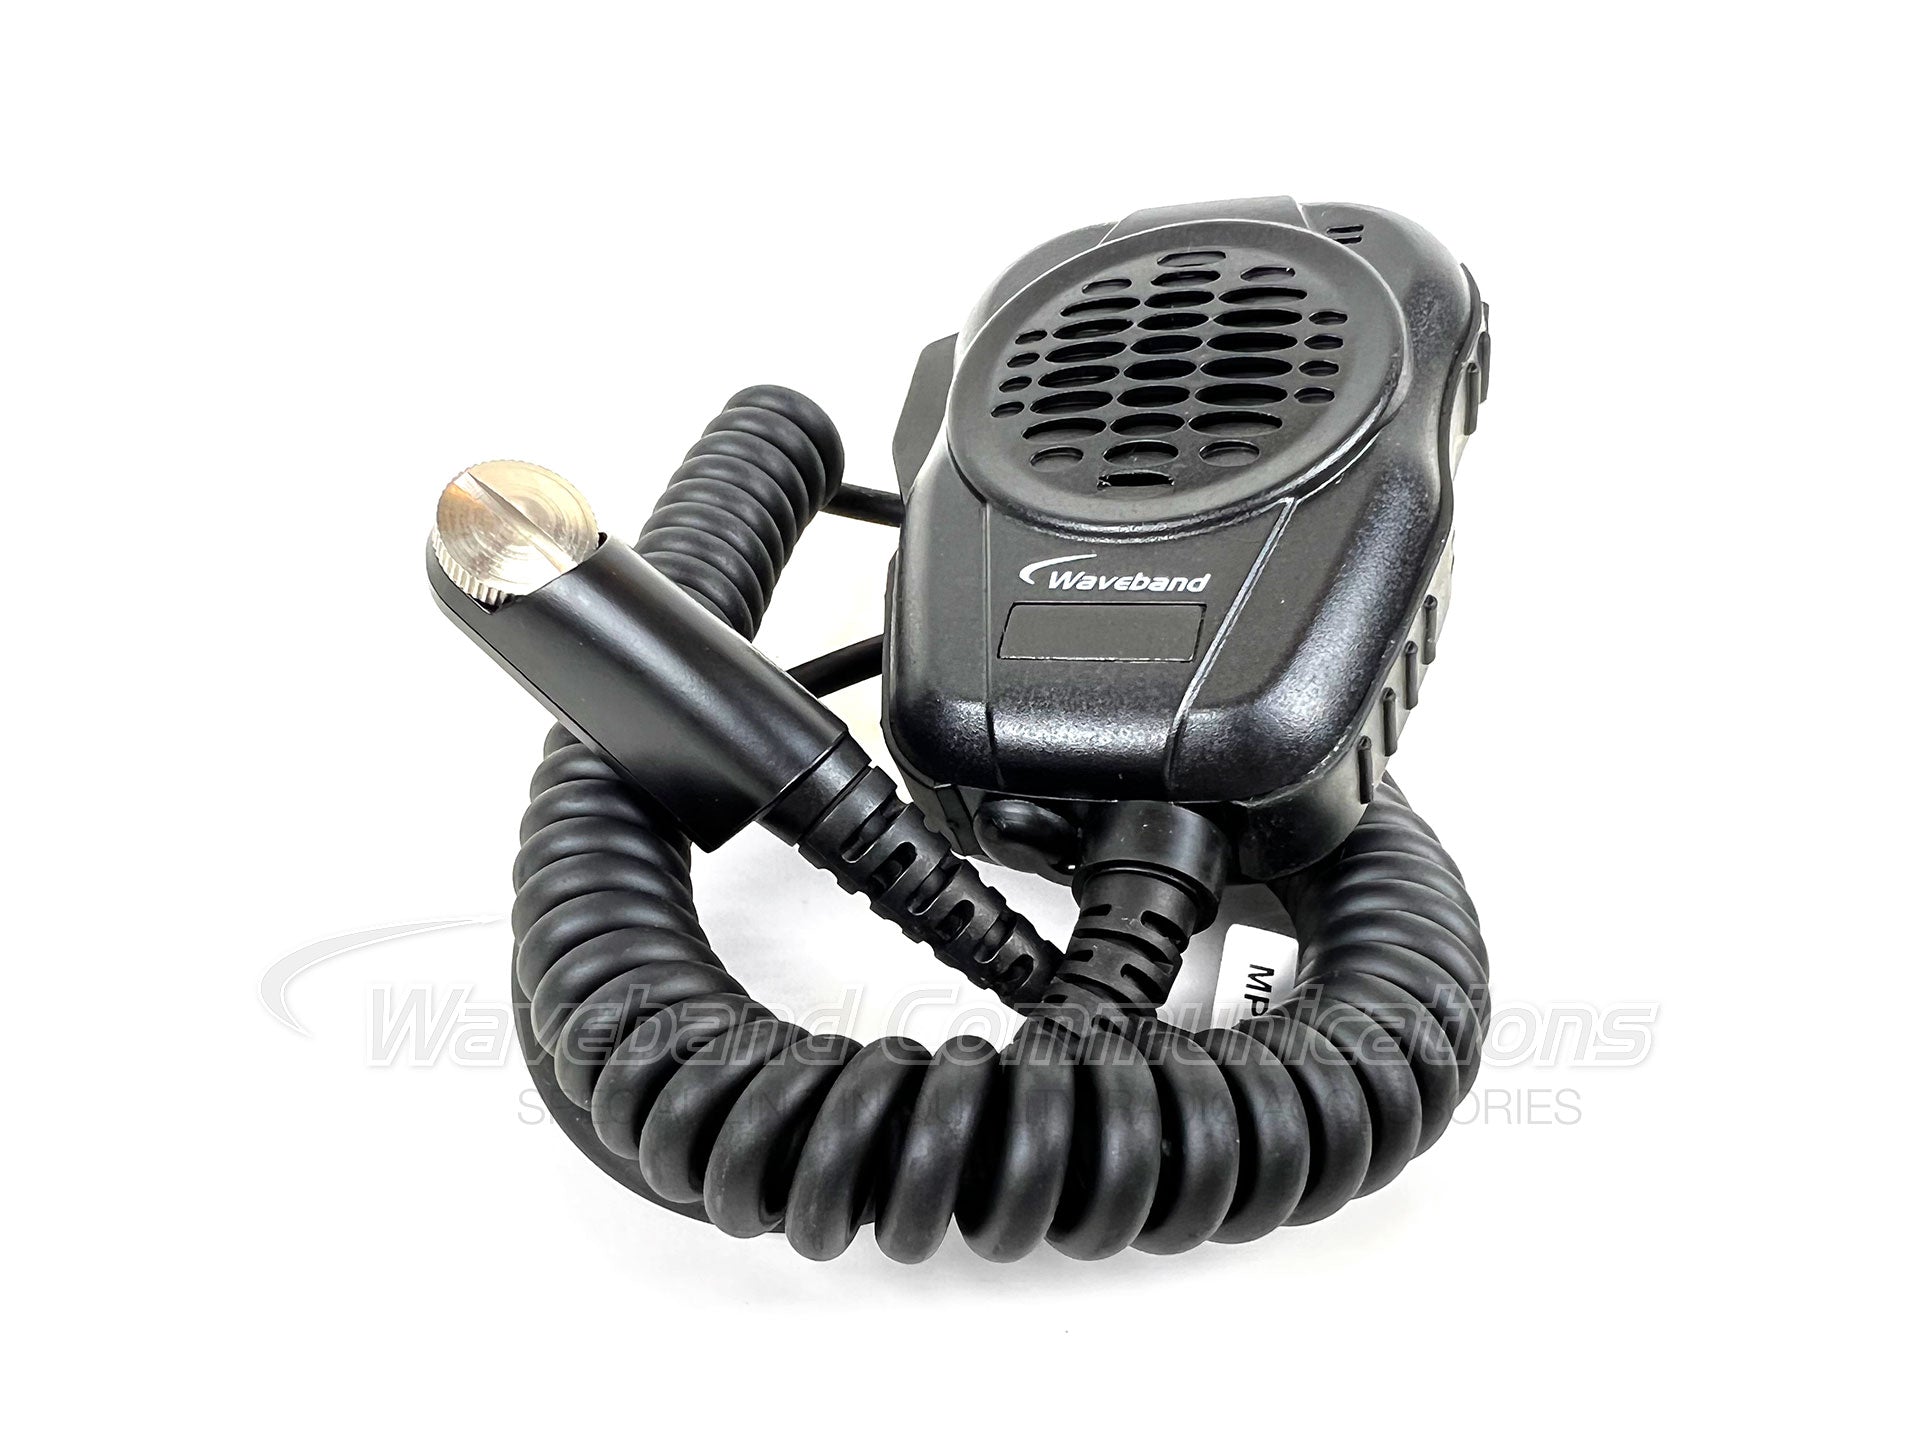 Wellenbereich WX-8004-E5-Serie Robuste Heavy-Duty-Öffentliche Sicherheit-Mikrofon für Harris Ma/Com XG-100 P WB#WX-8004-E5